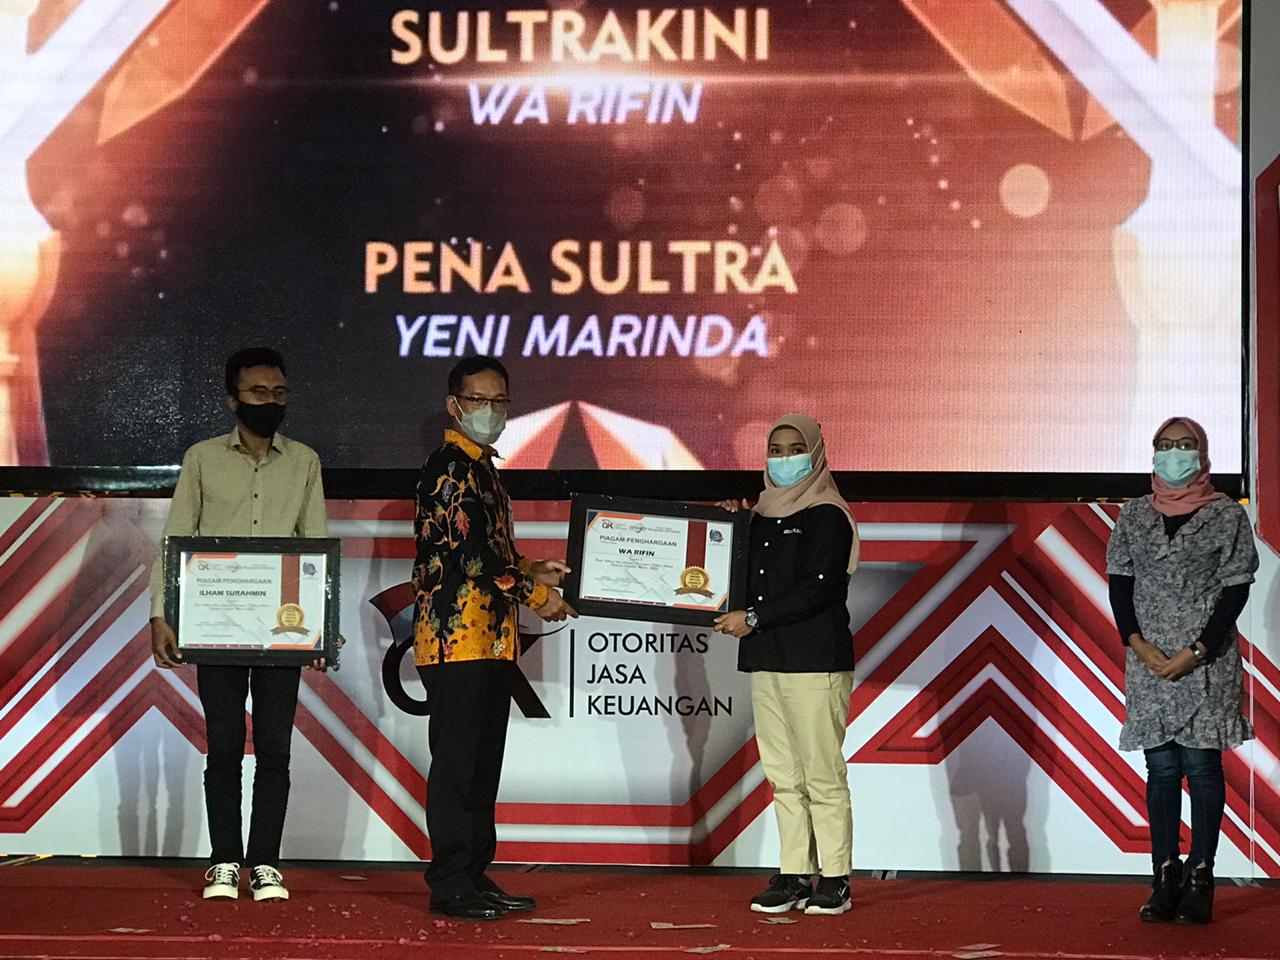 Kepala OJK Sultra, Mohammd Fredly Nasution menyerahkan Penghargaan Dilan Award kepada Jurnalis SultraKini.com, Wa Rifin (Foto: Istimewa)